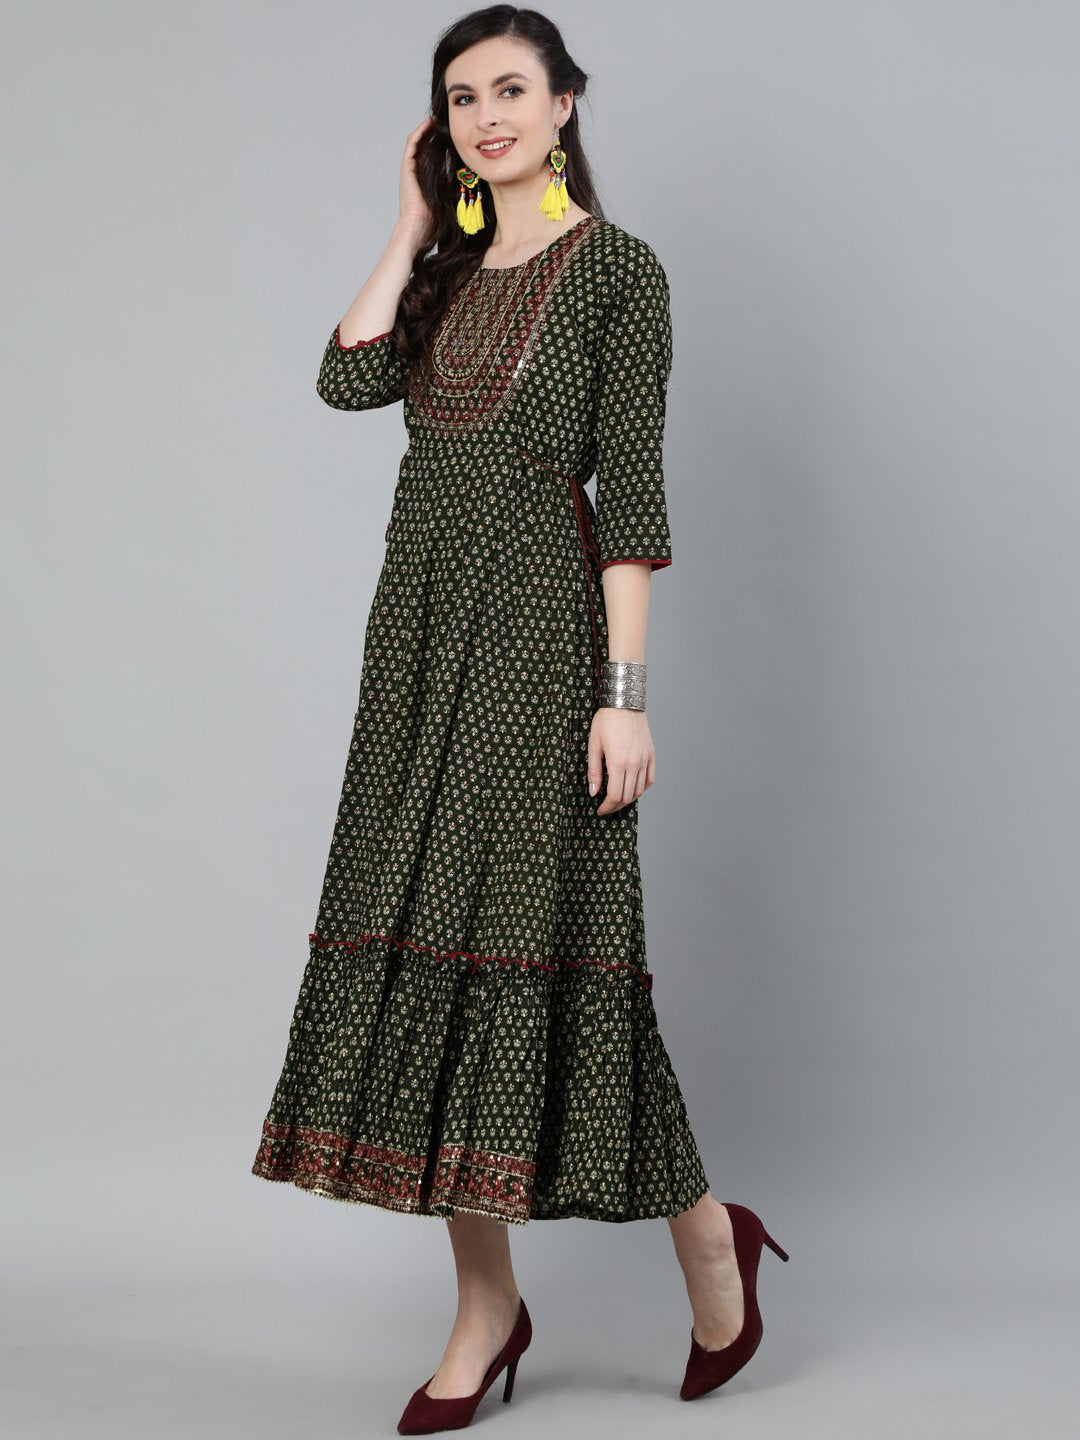 Ishin Women's Cotton Green Embroidered Anarkali Dress